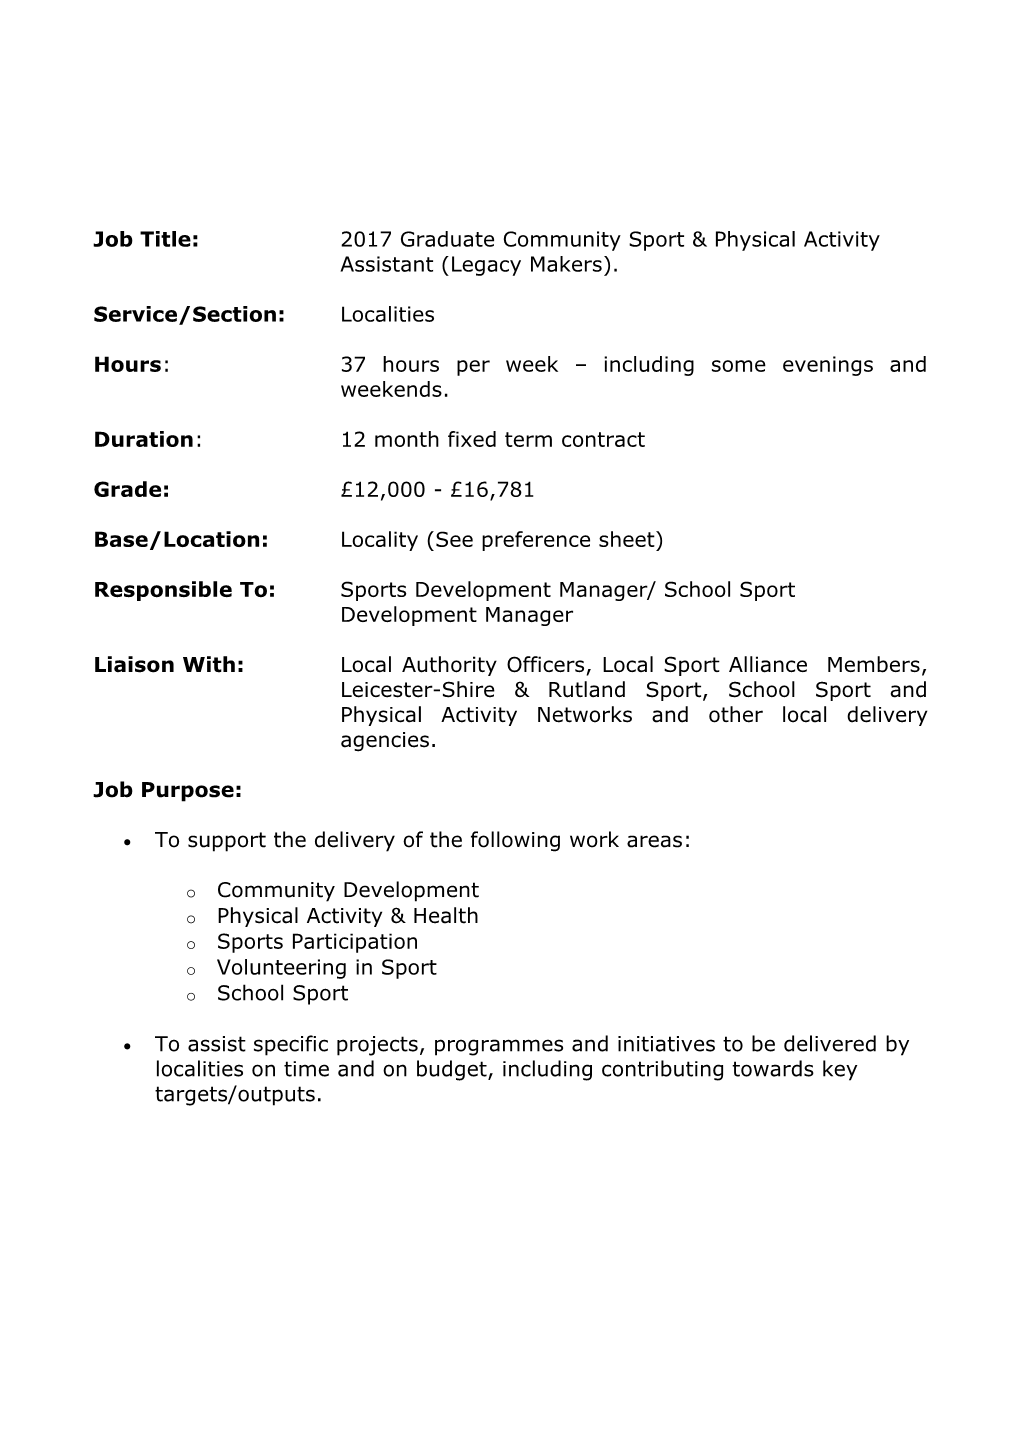 Job Title:2017 Graduate Community Sport & Physical Activity Assistant (Legacy Makers)